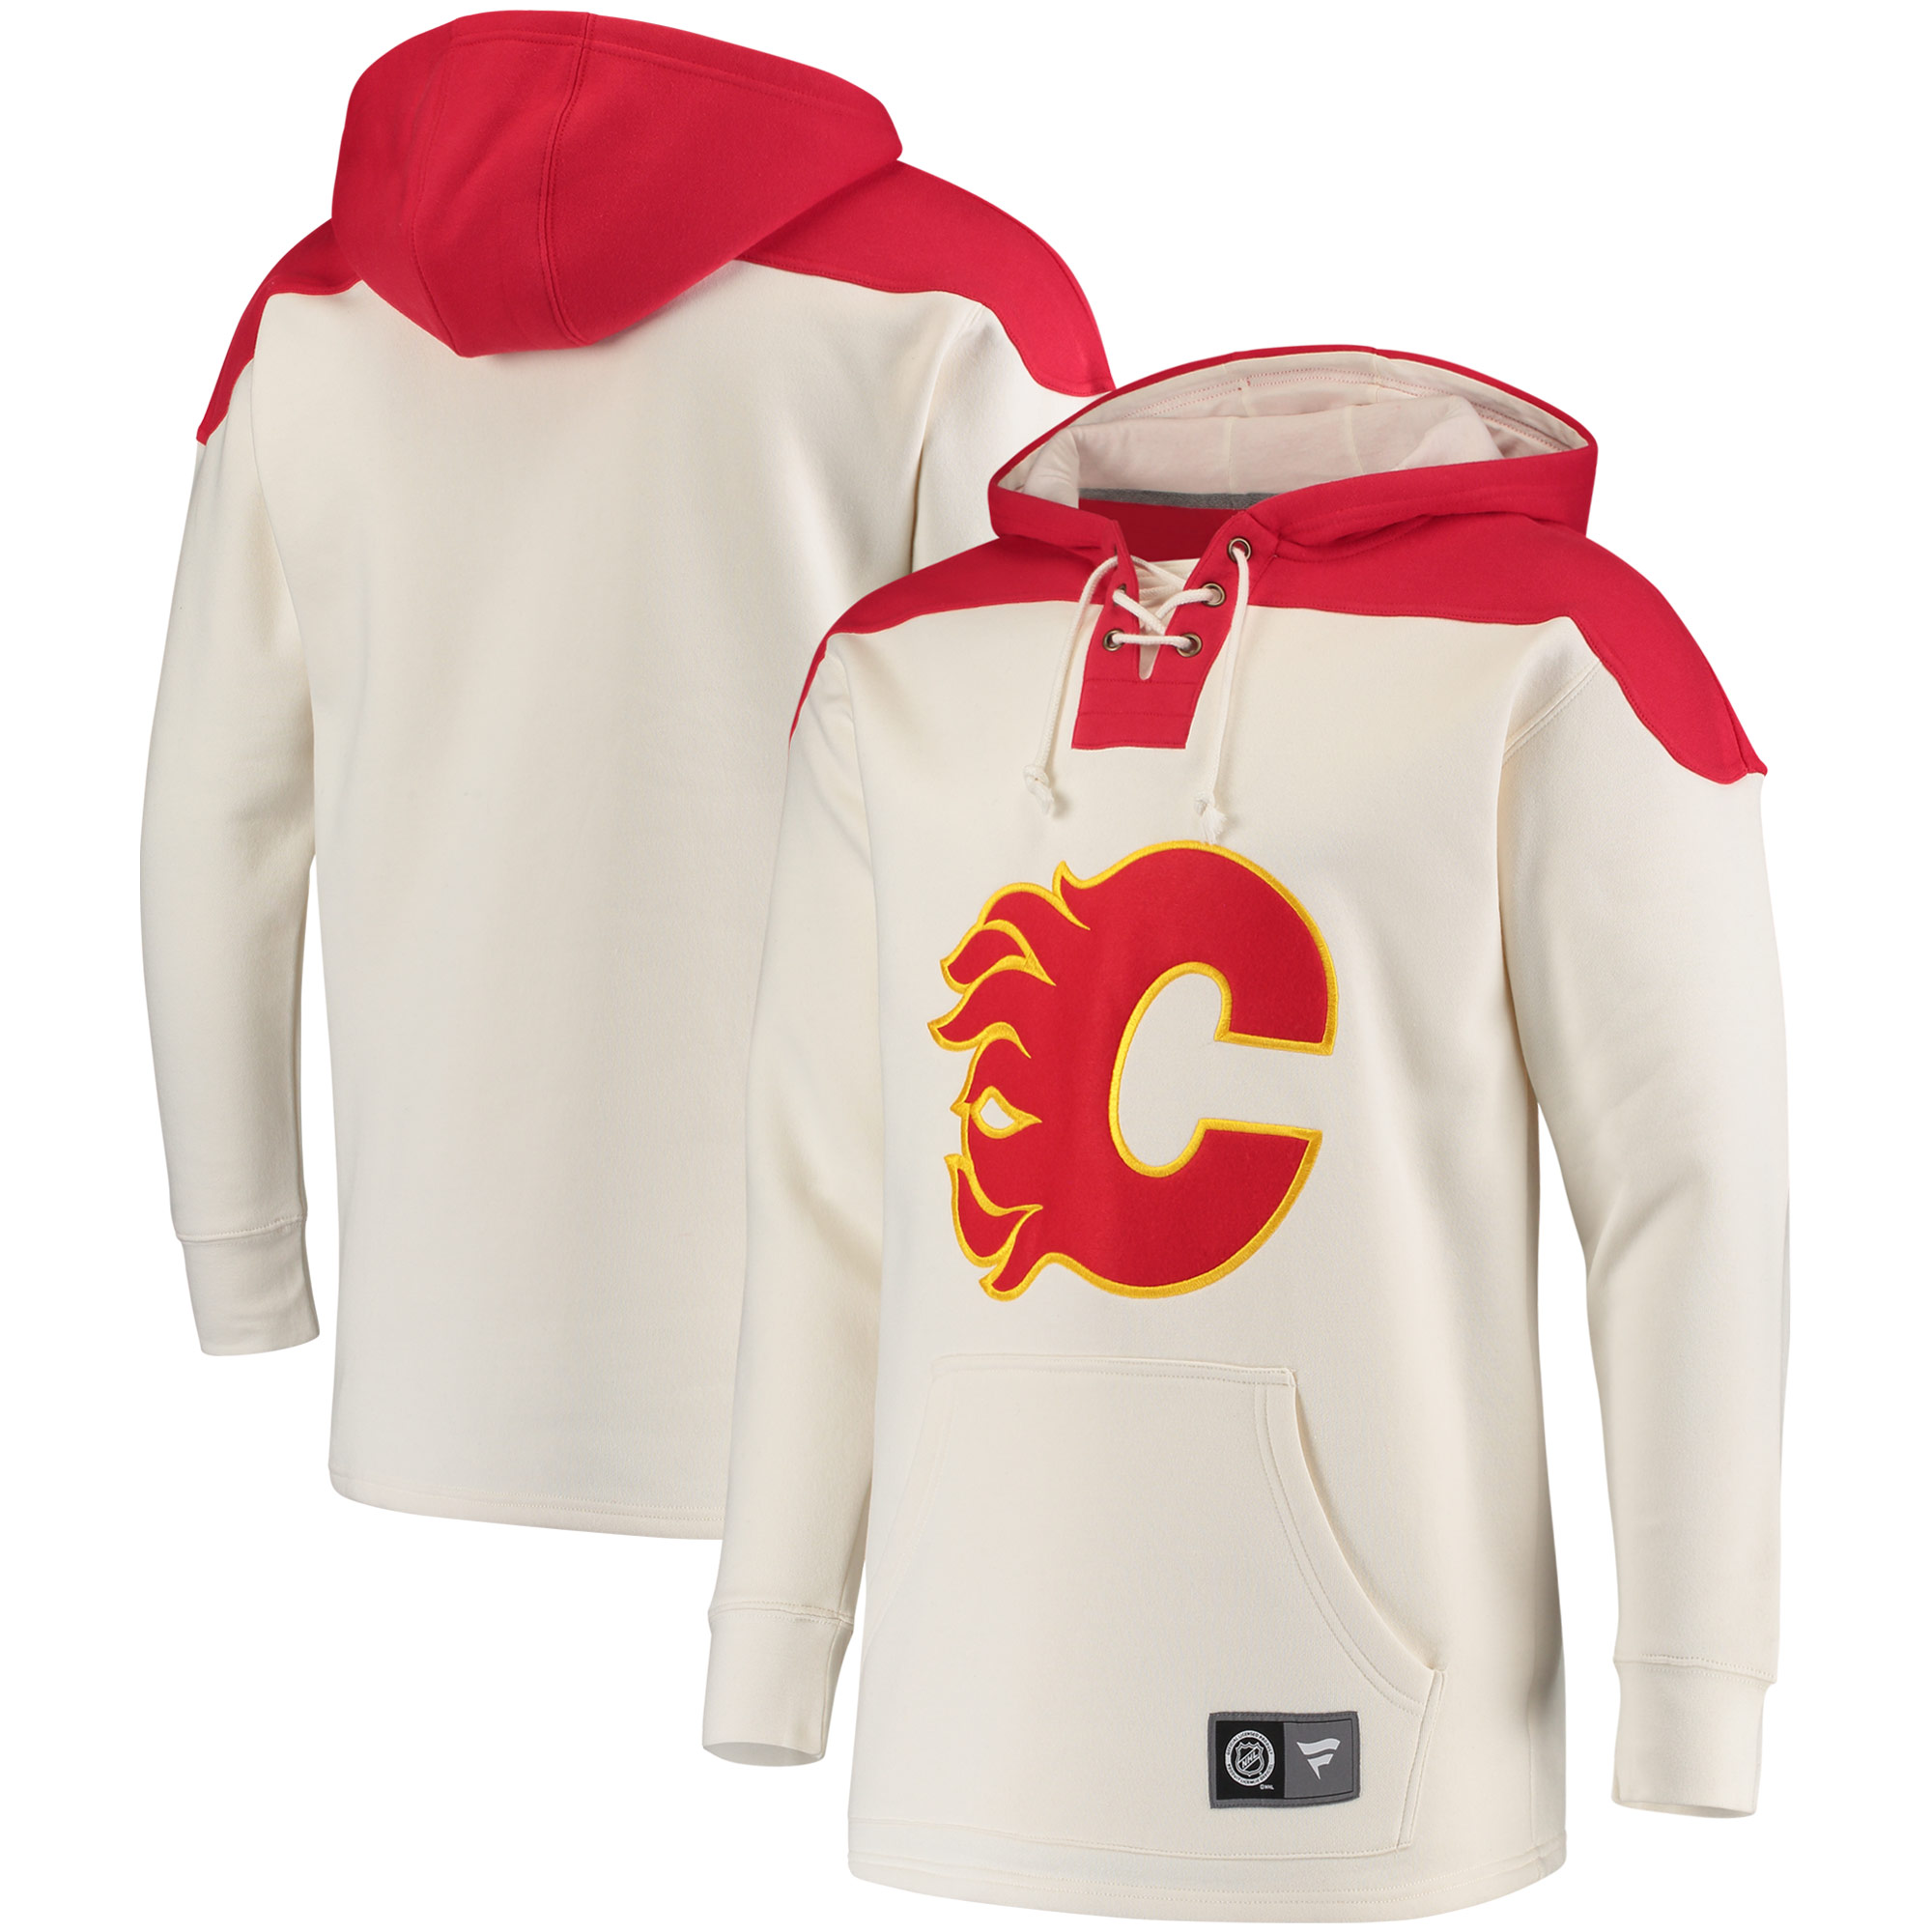 Men's Calgary Flames Fanatics Branded White/Red Breakaway Lace Up Hoodie